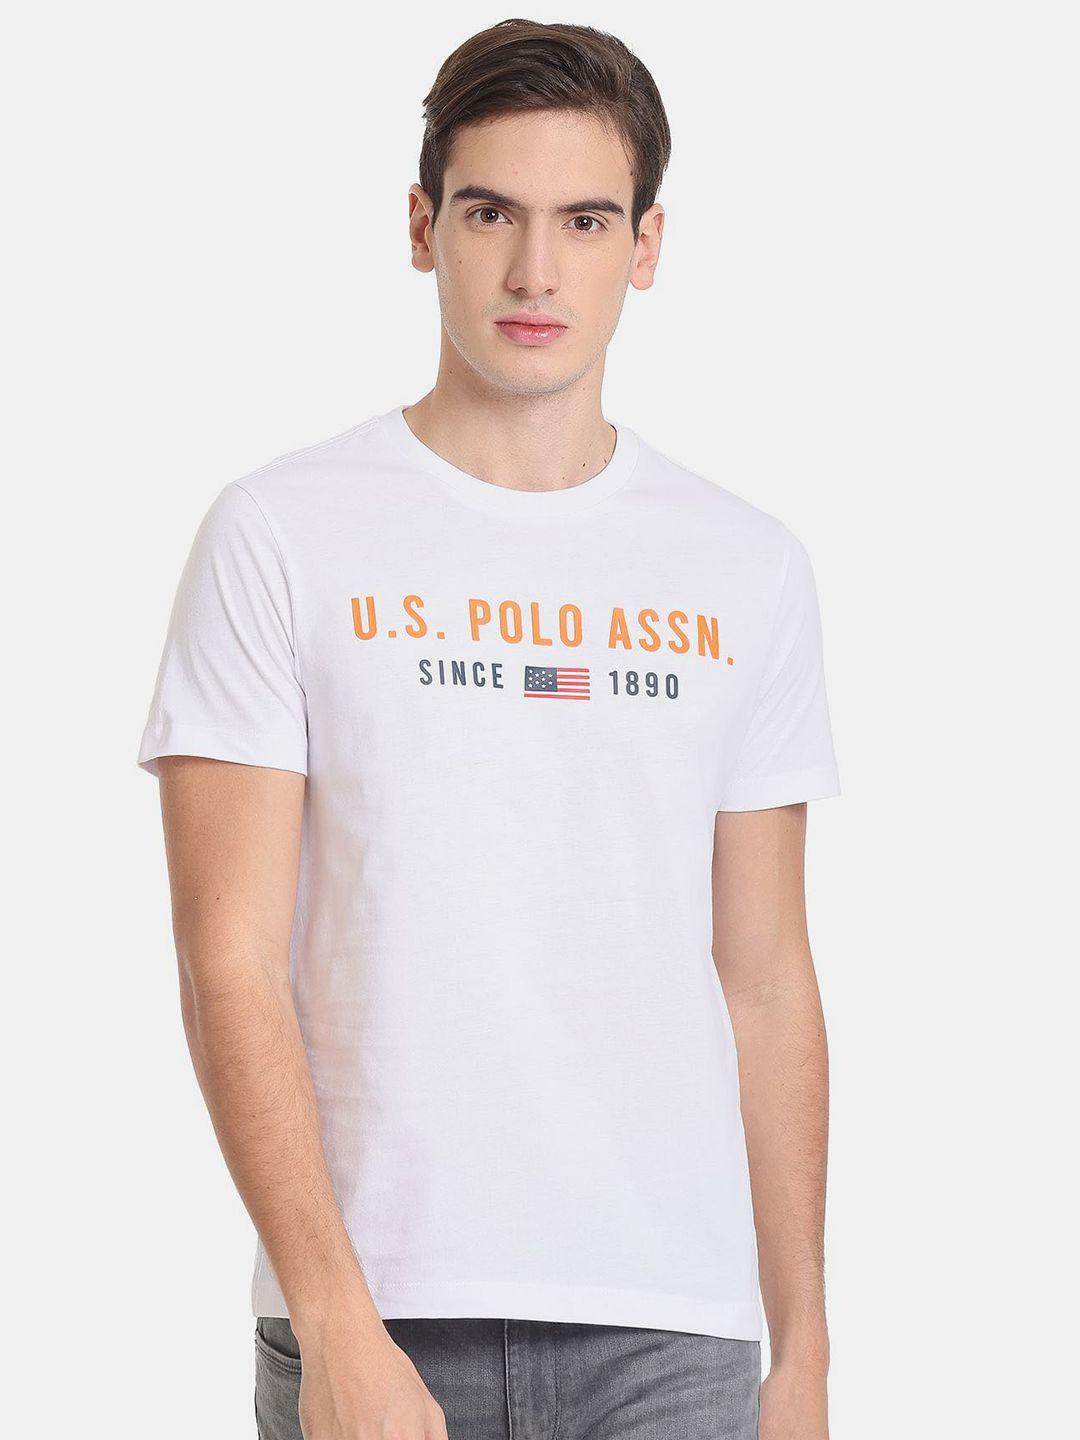 u.s. polo assn. men brand logo printed slim fit pure cotton t-shirt